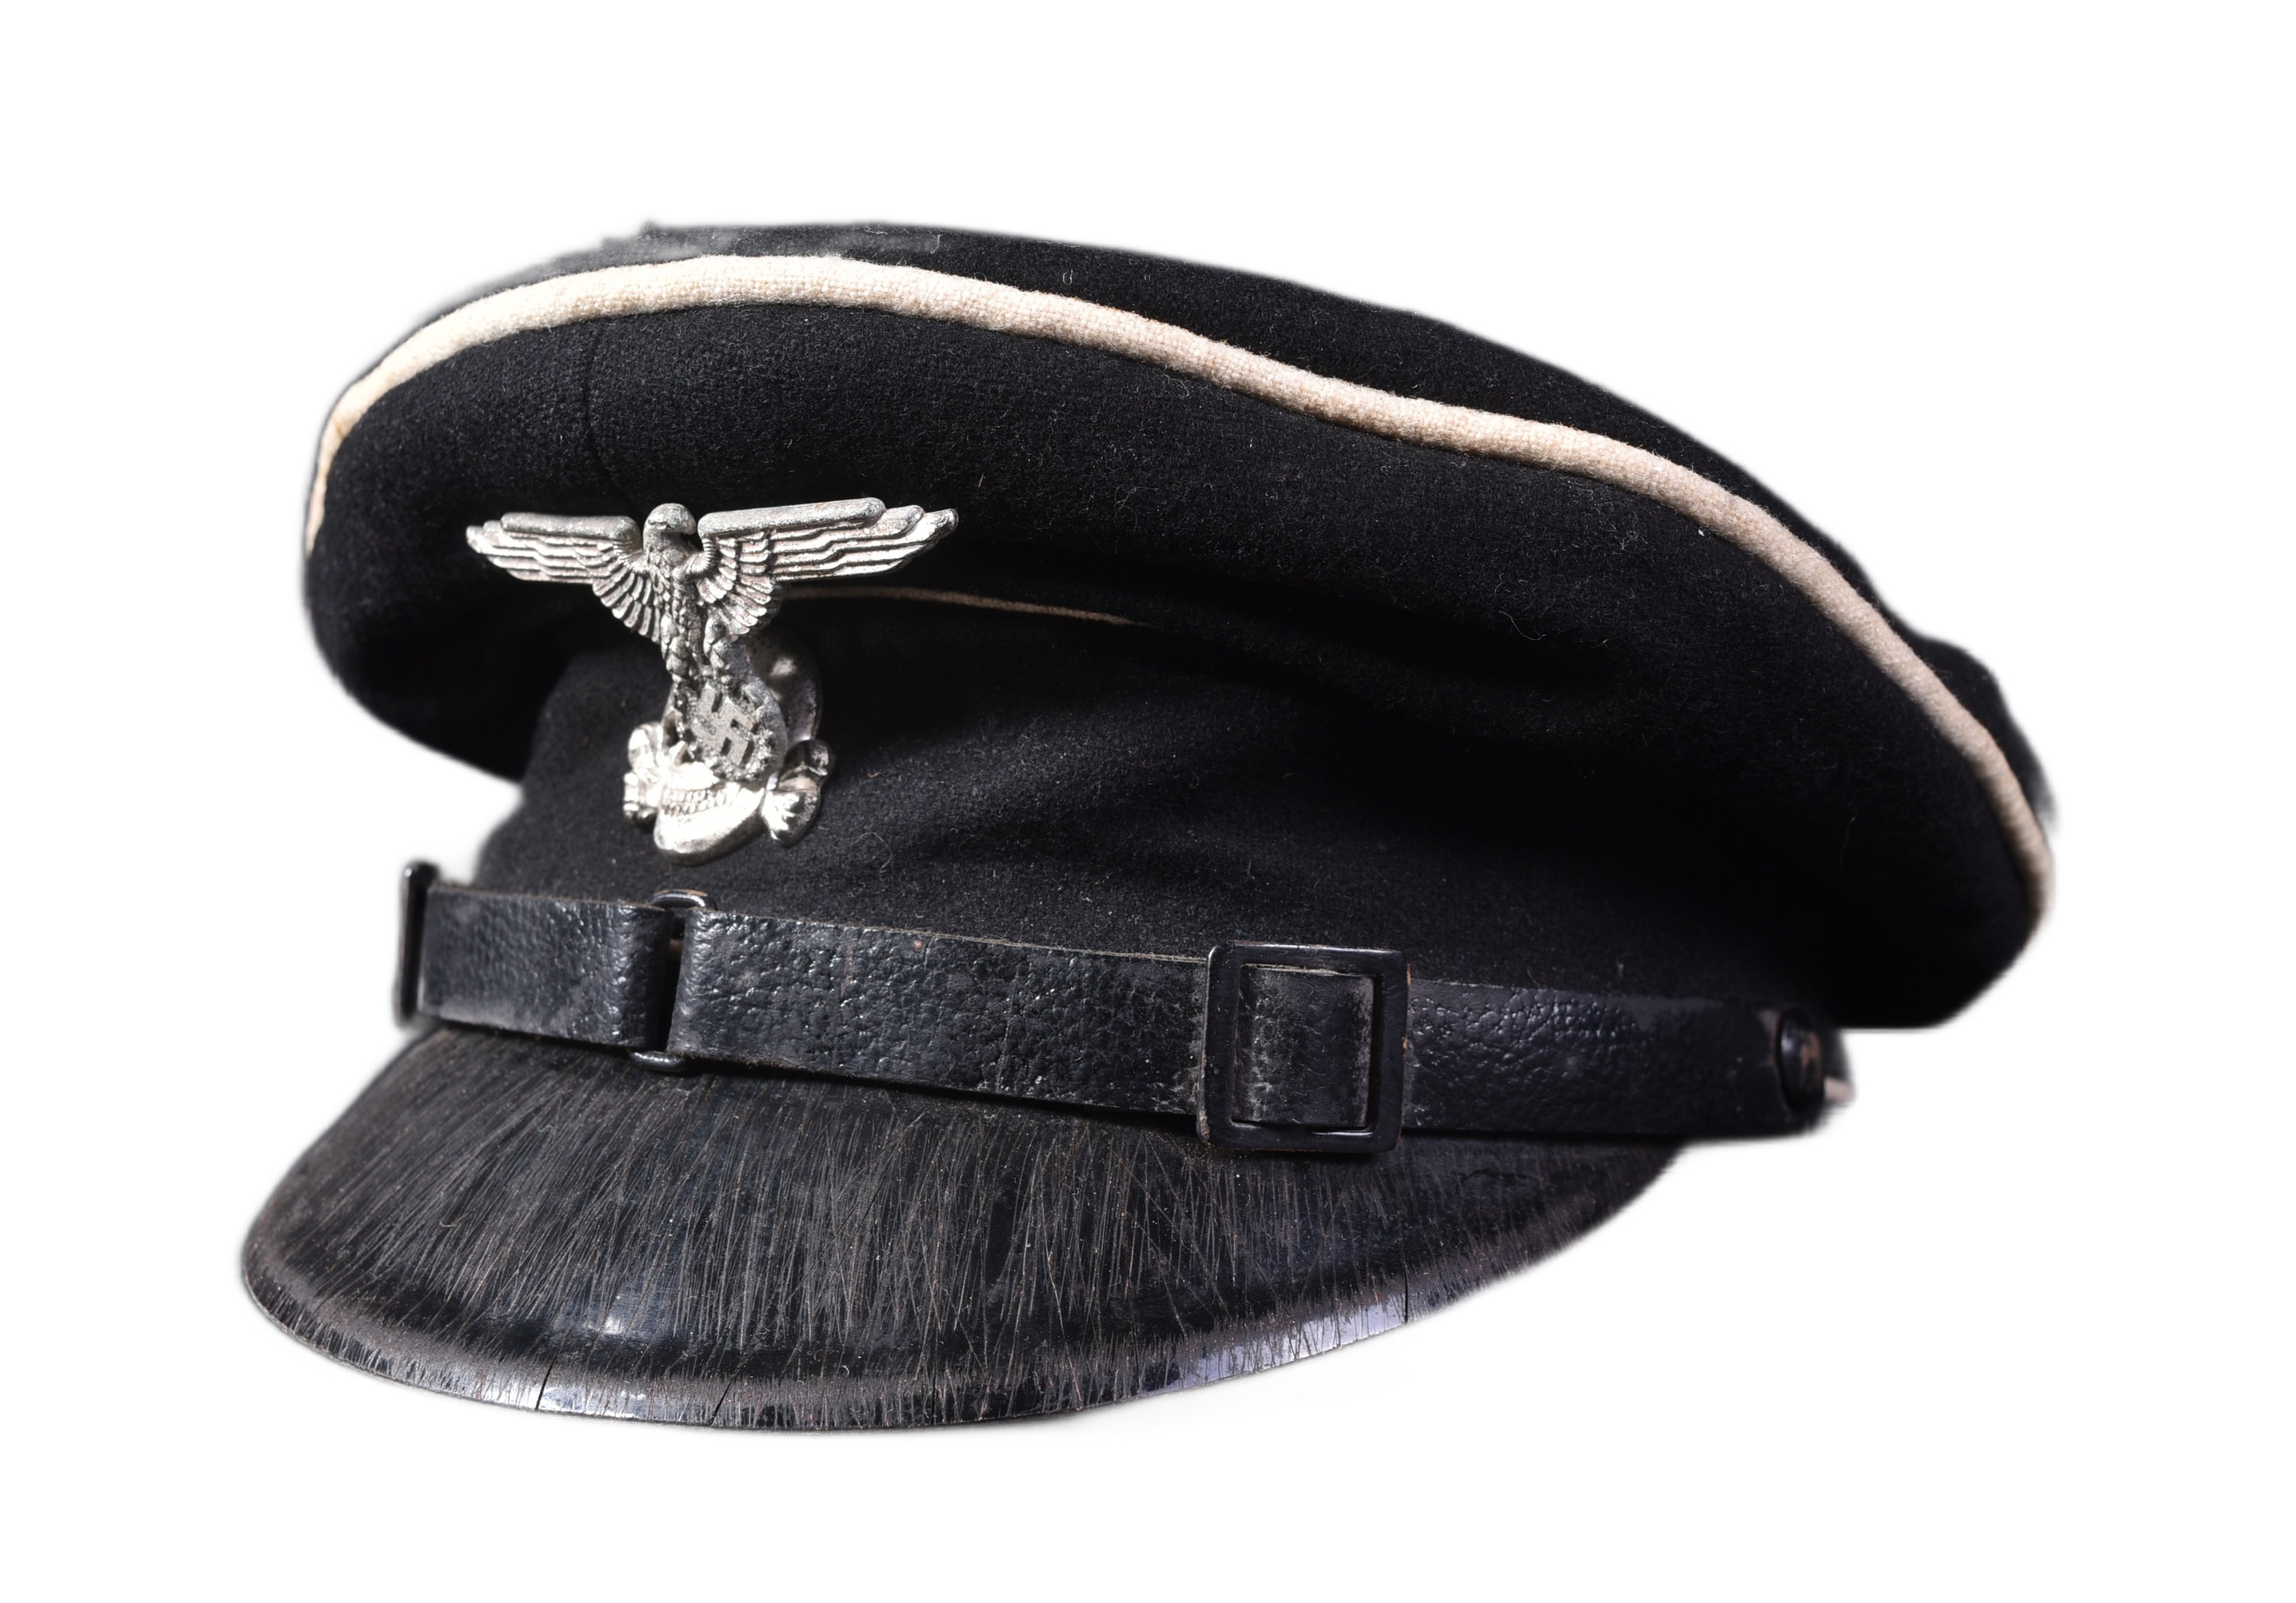 WWII SECOND WORLD WAR GERMAN THIRD REICH SS OFFICERS CAP